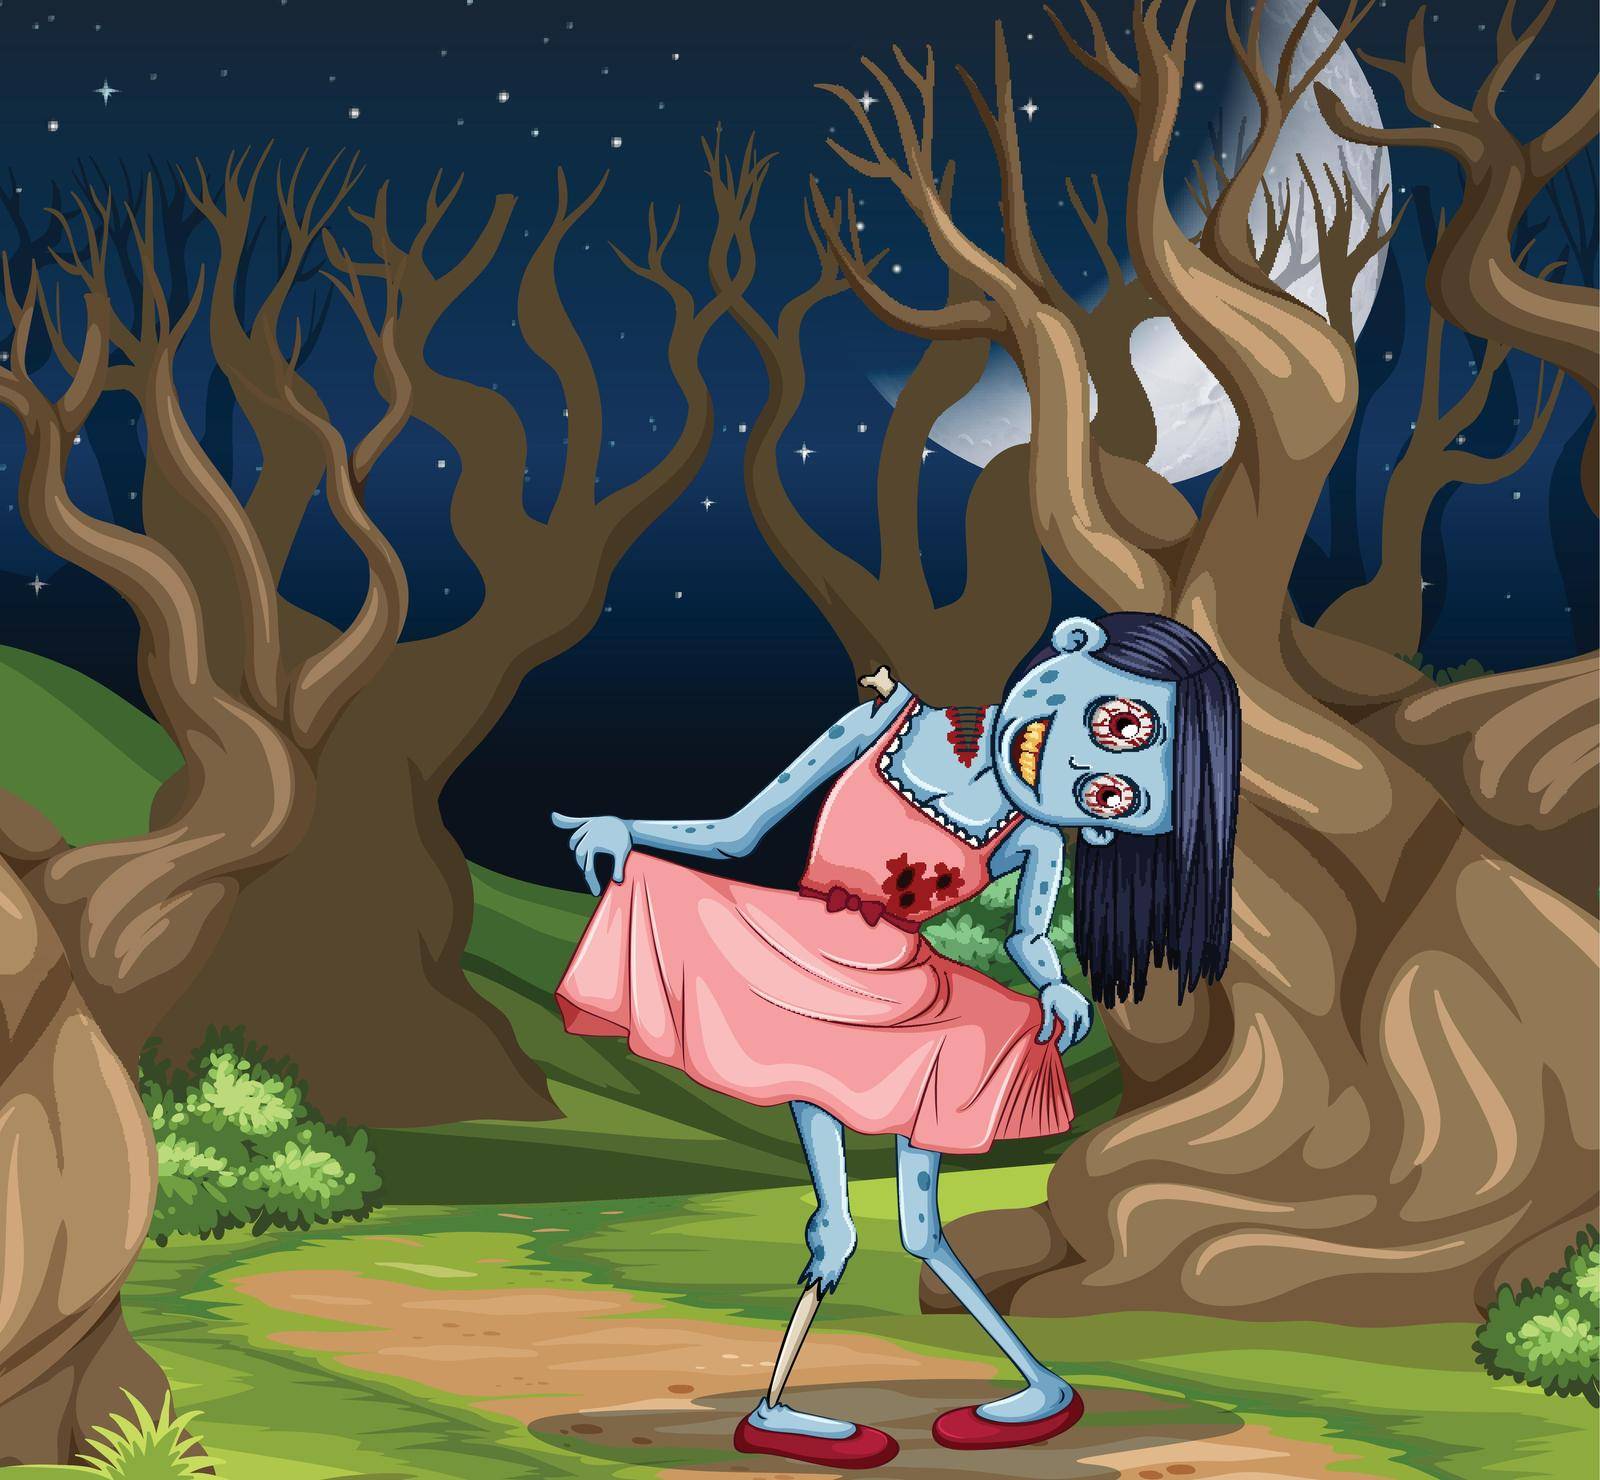 Creepy zombie girl scene illustration